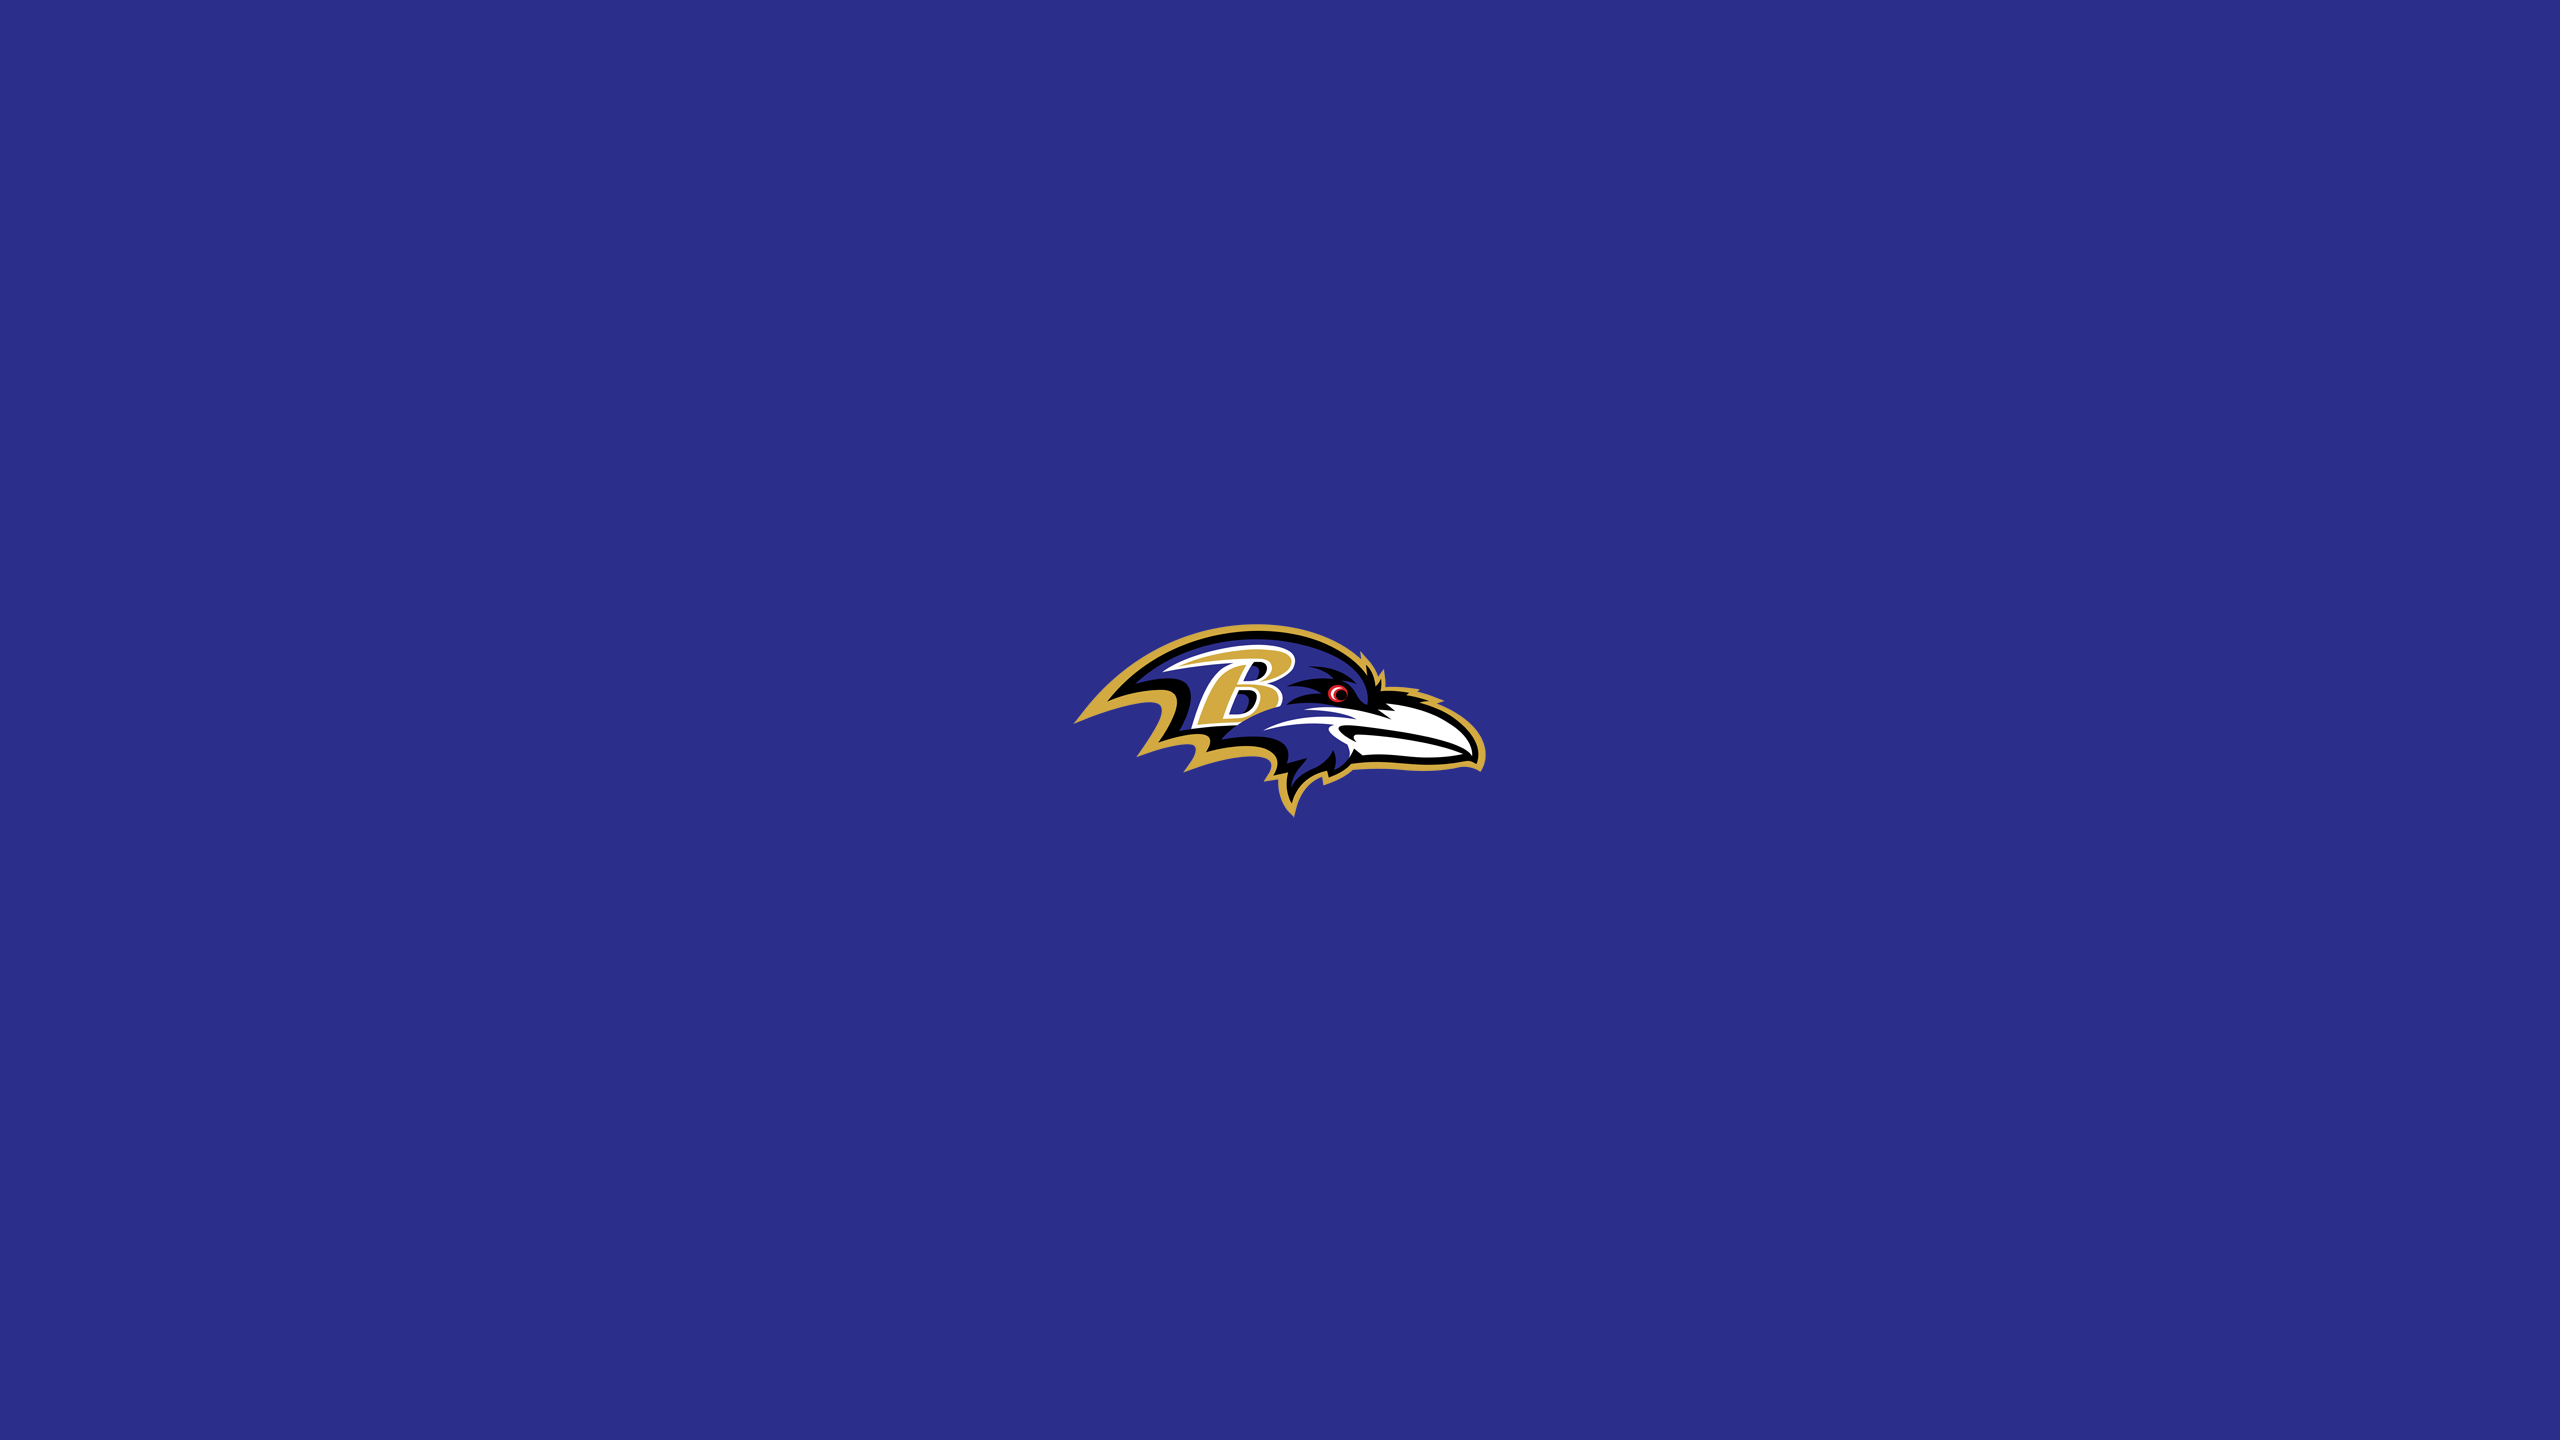 Baltimore Ravens - NFL - Square Bettor